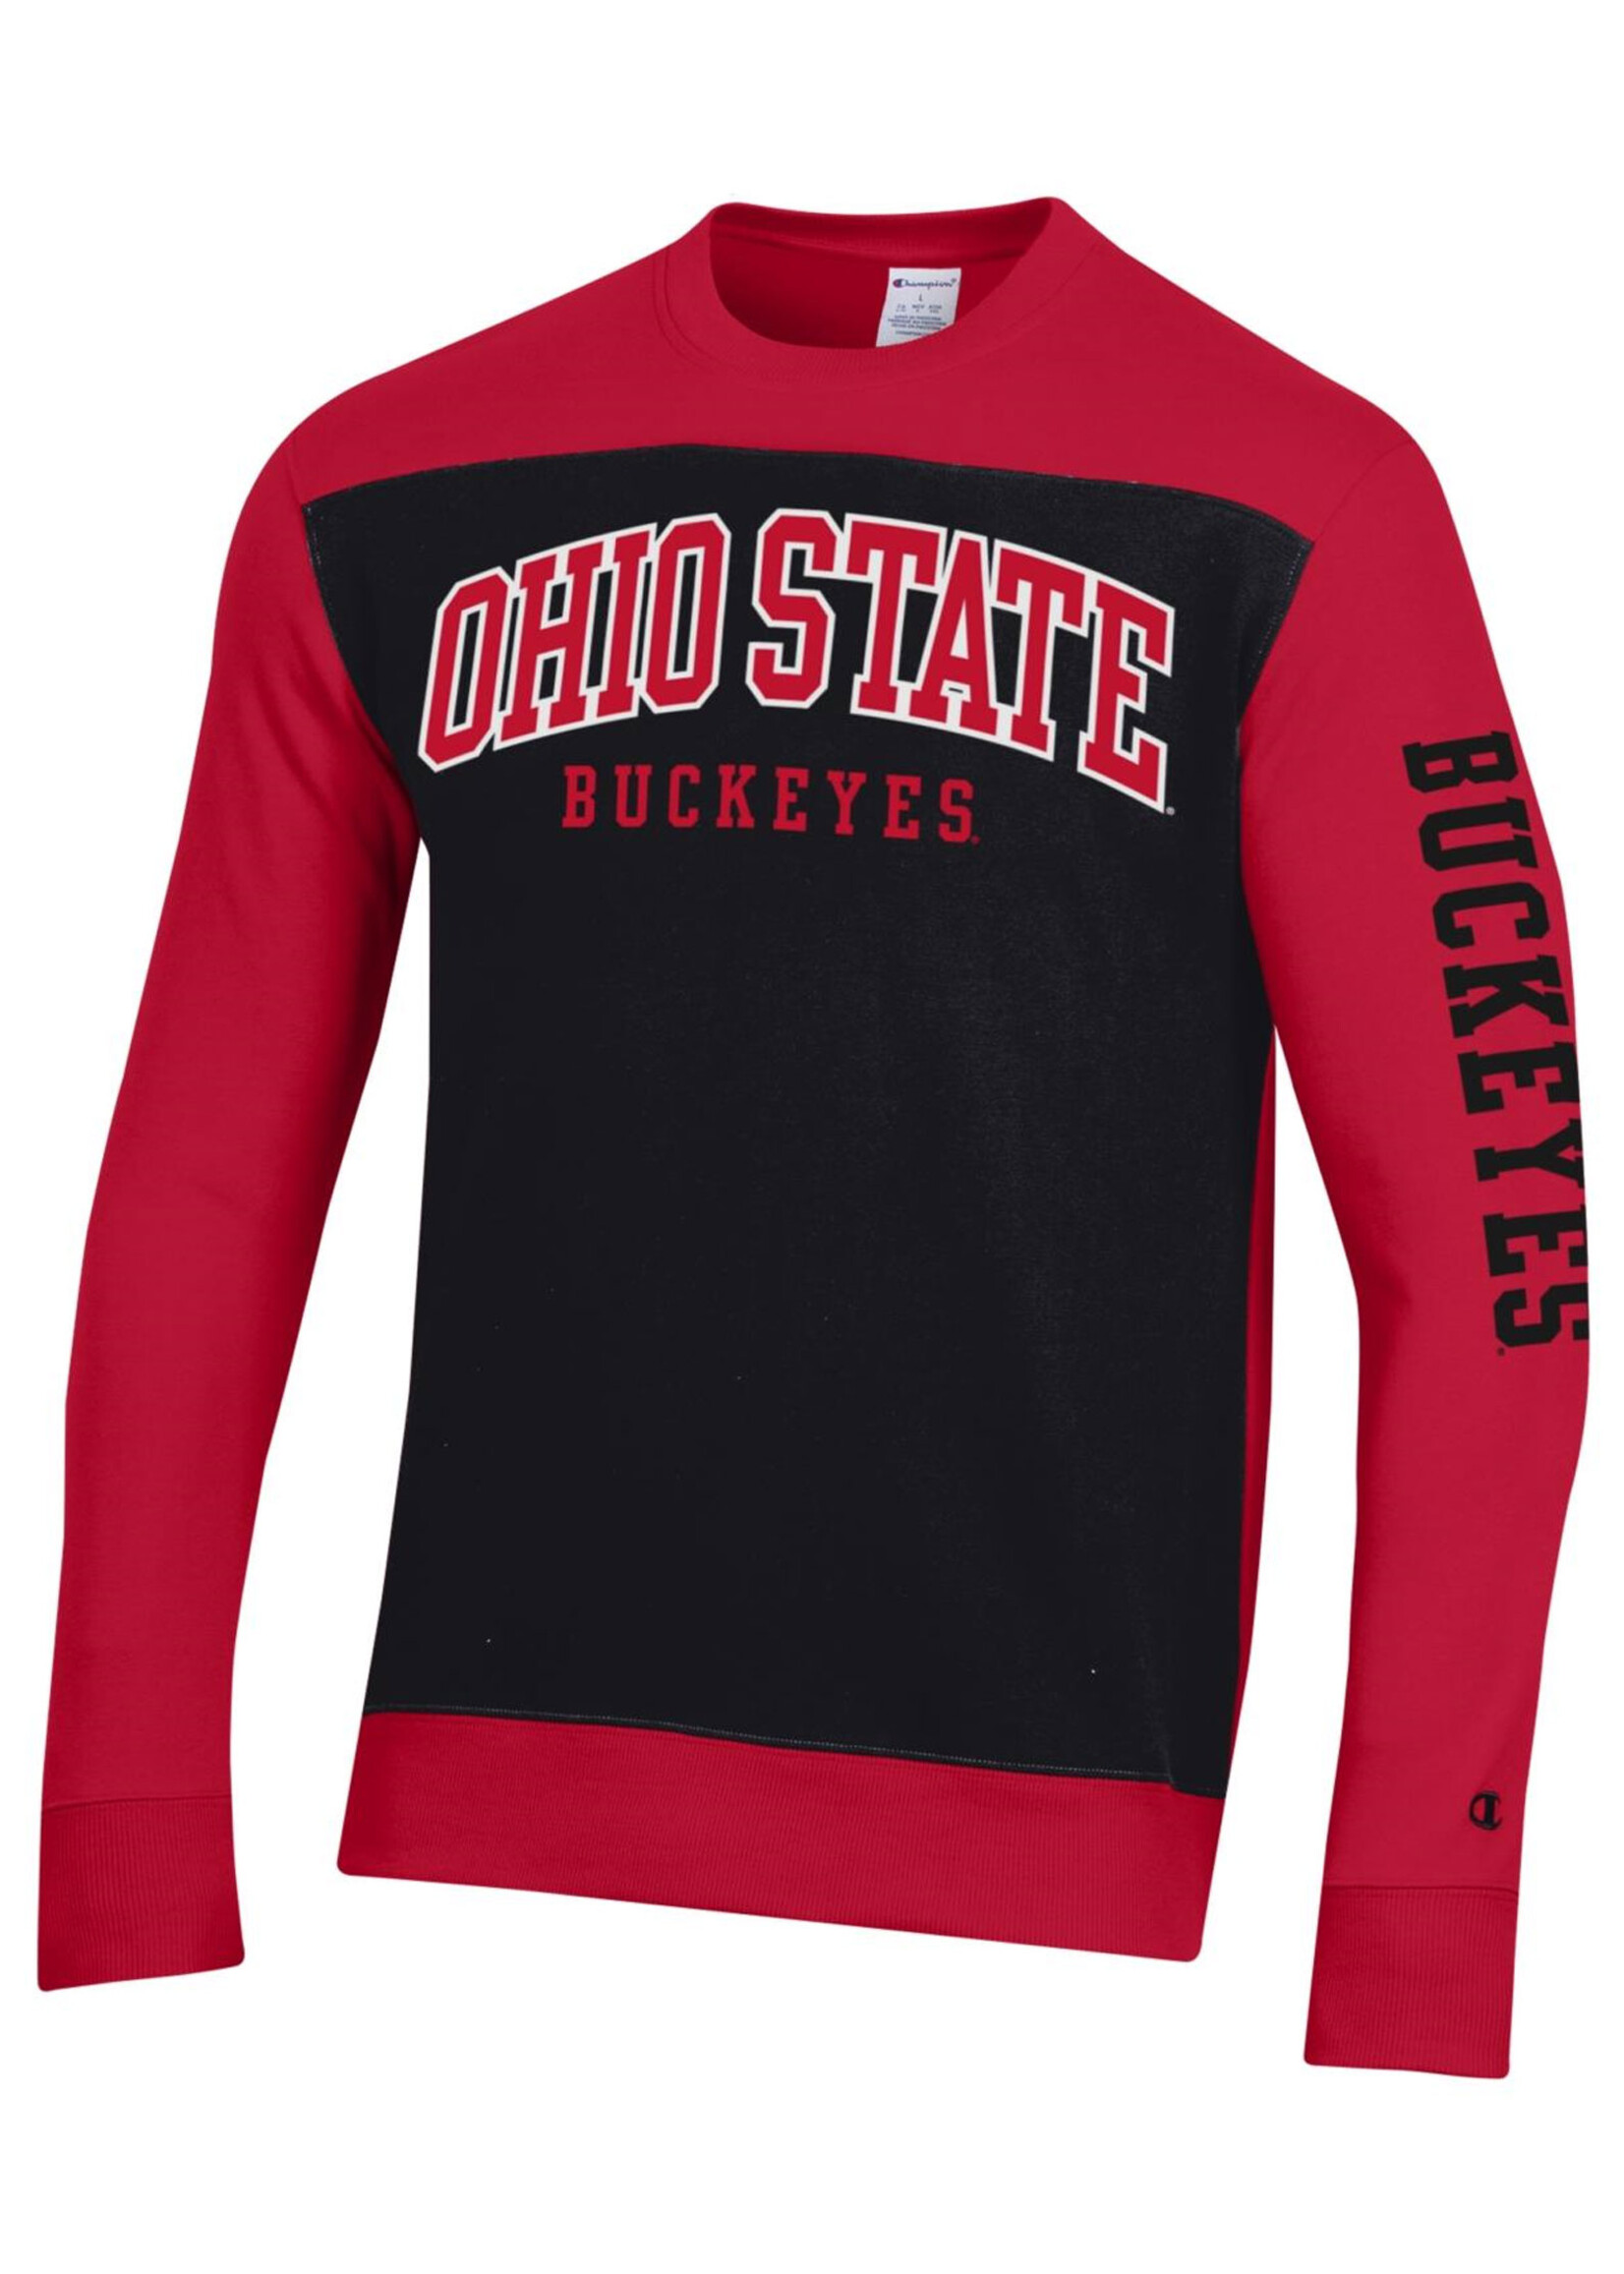 Ohio State Buckeyes Super Fan Red & Black Crew Sweatshirt